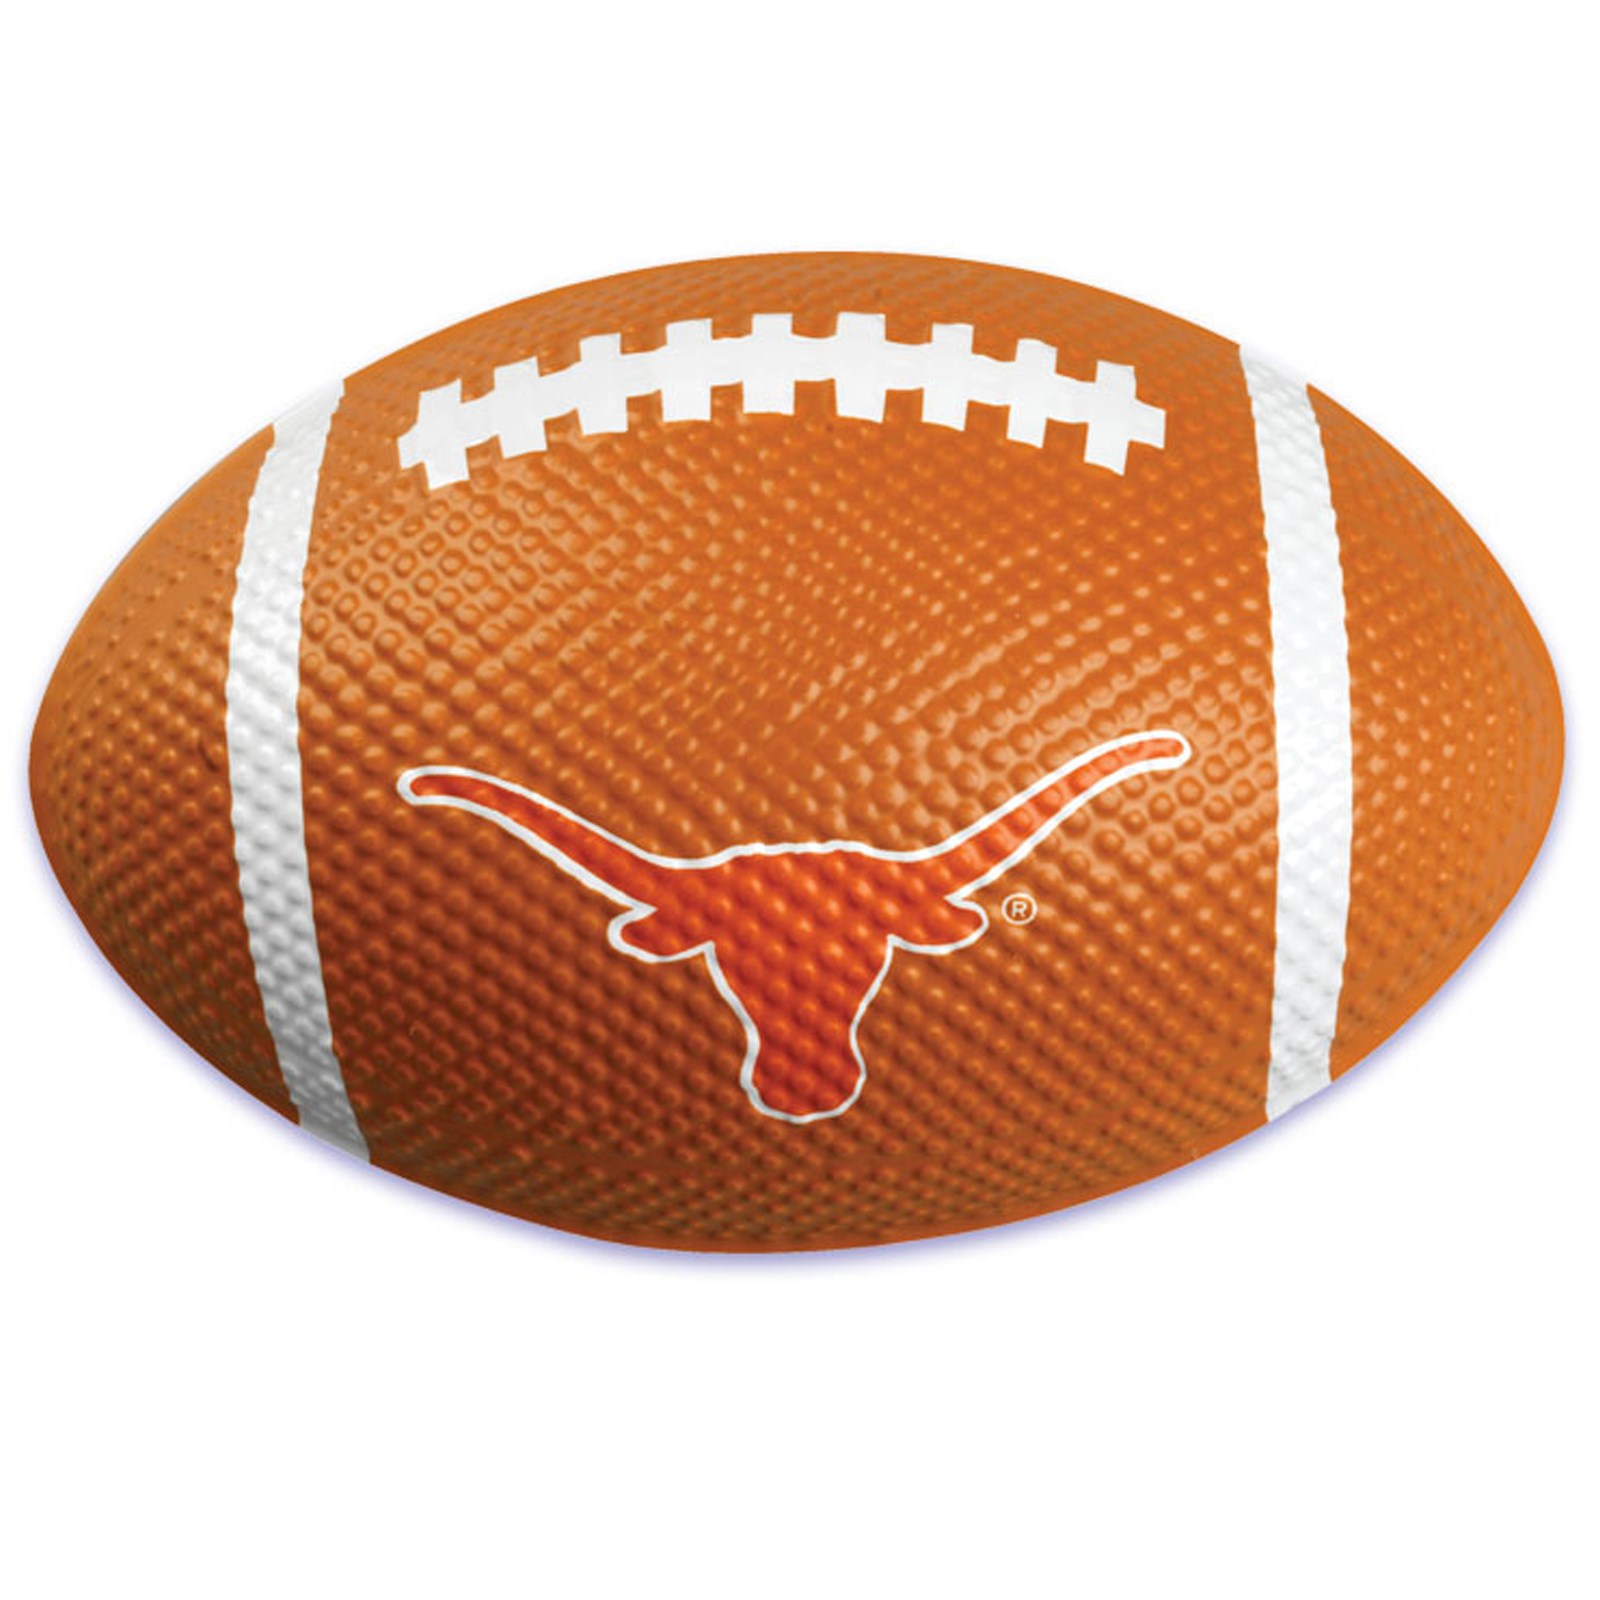 Texas Longhorns - Football Cake Decoration